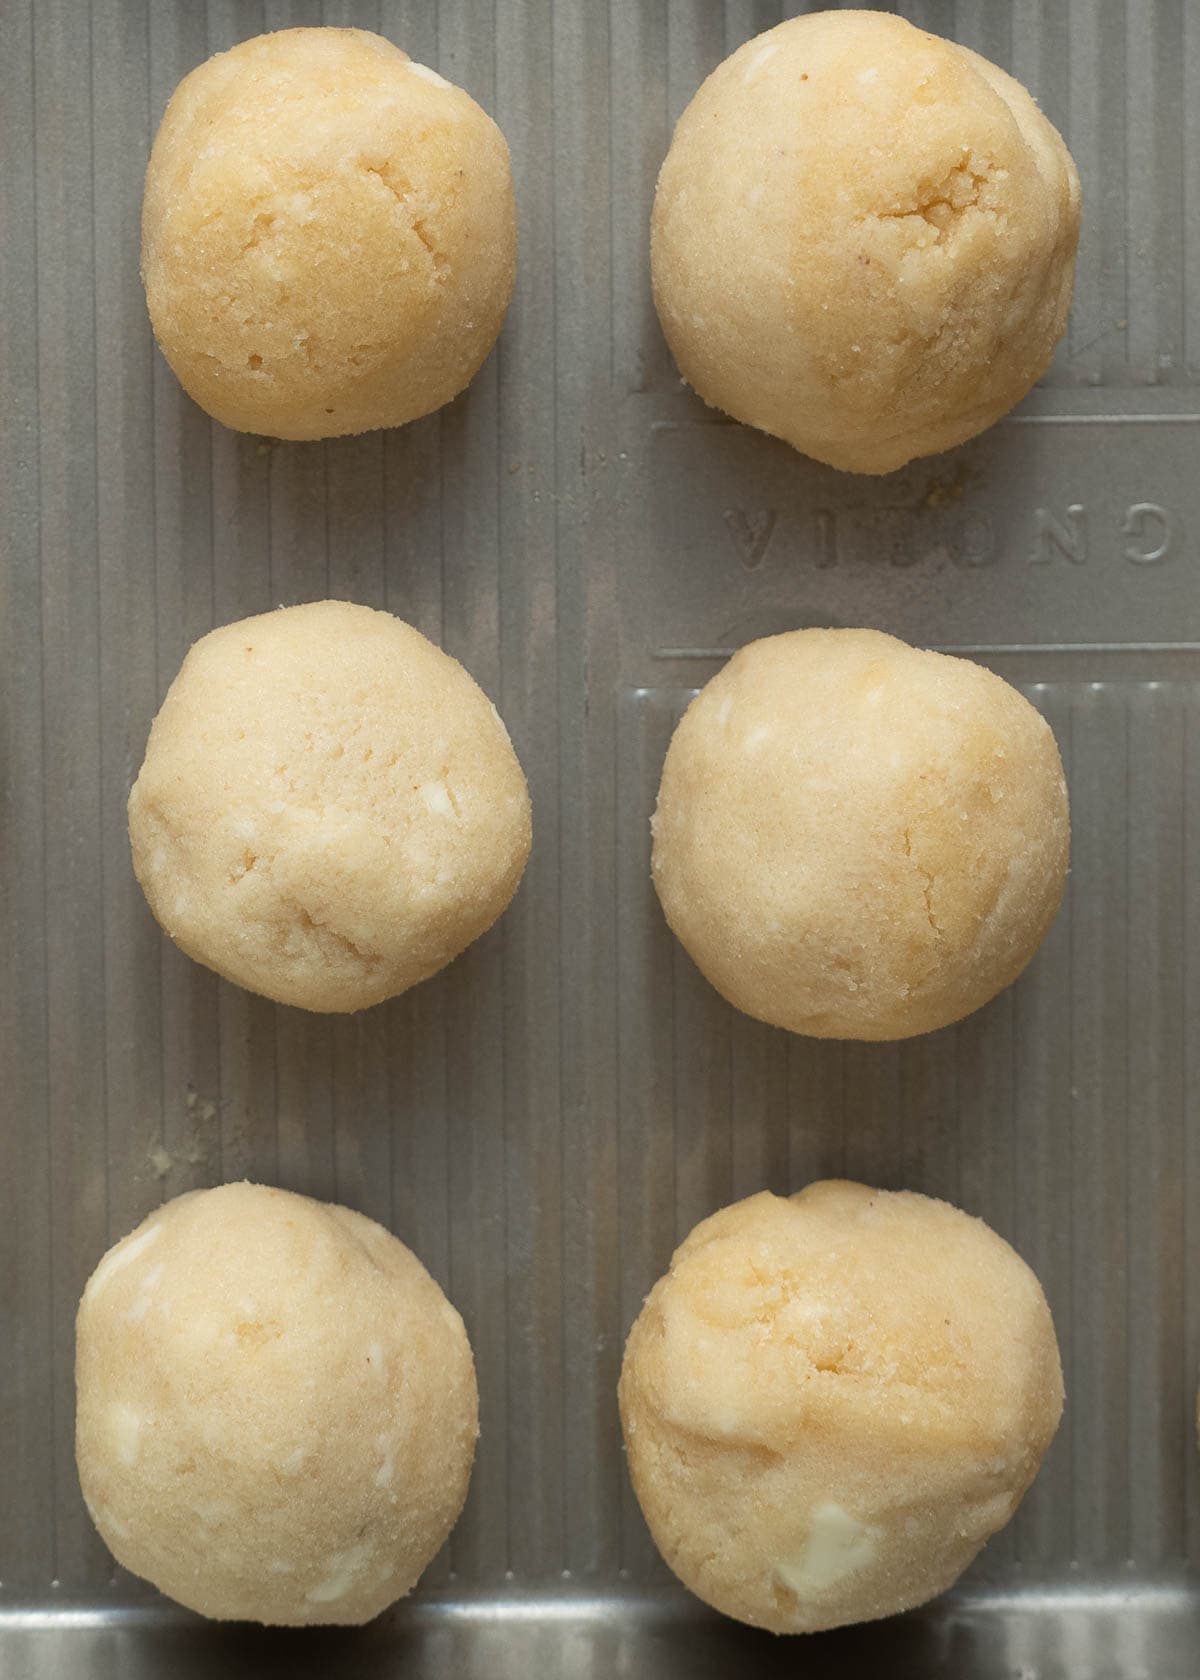 1 inch cookie dough balls on a baking sheet